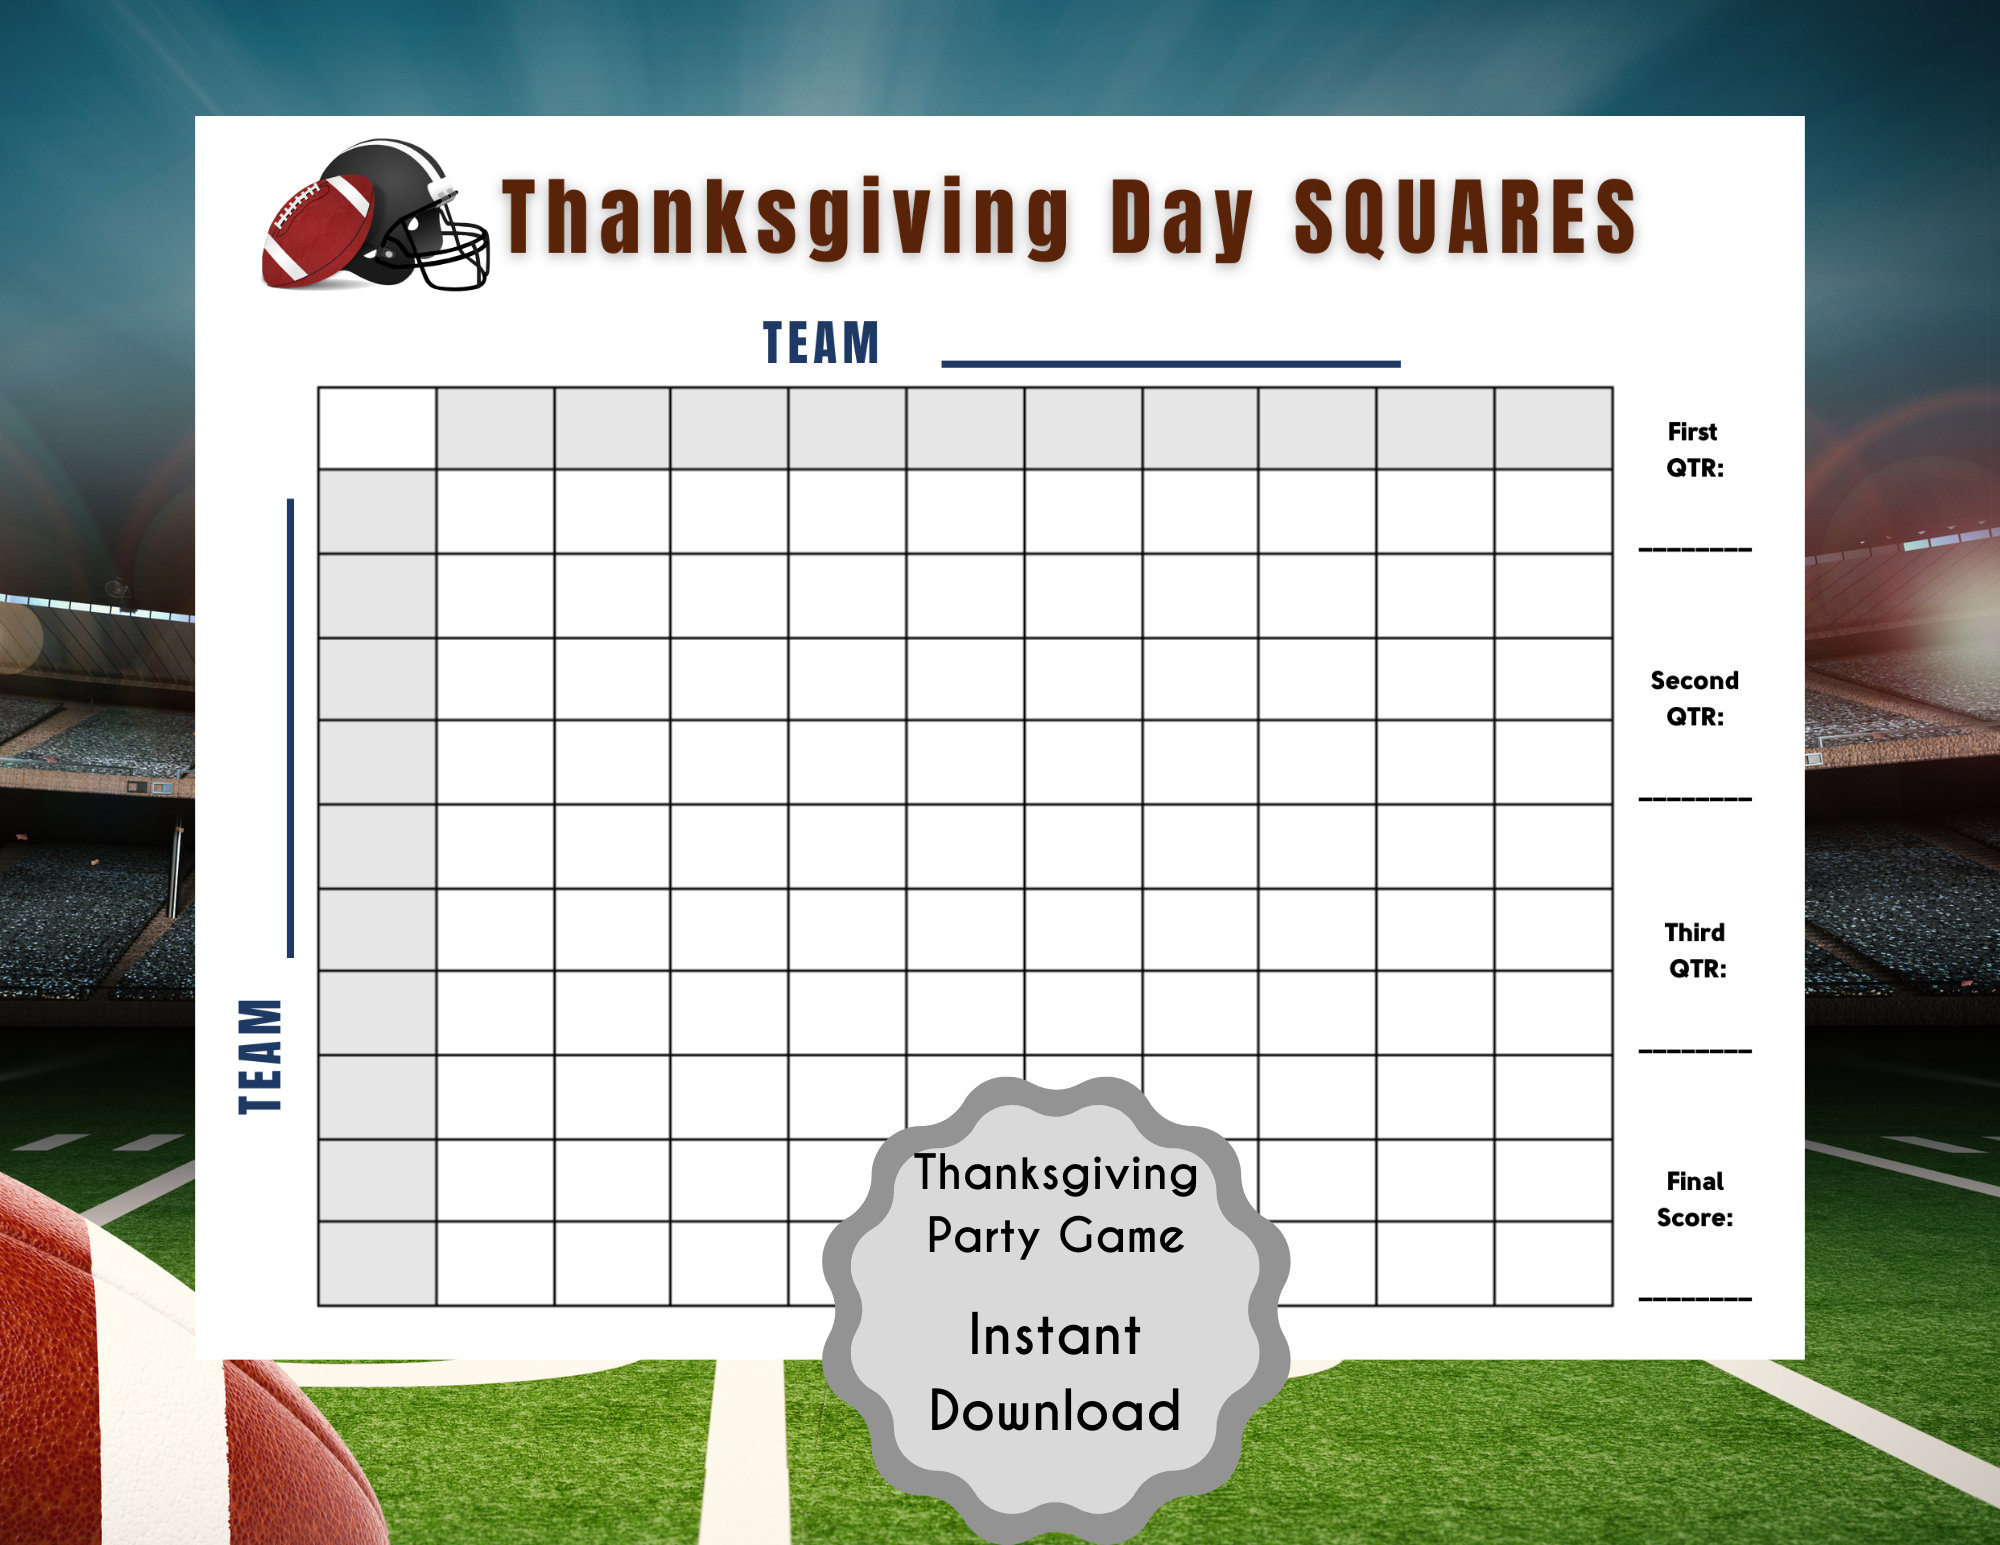 Thanksgiving Football Squares Game Free Google Docs Template by Free Google  Docs Templates - gdoc.io on Dribbble